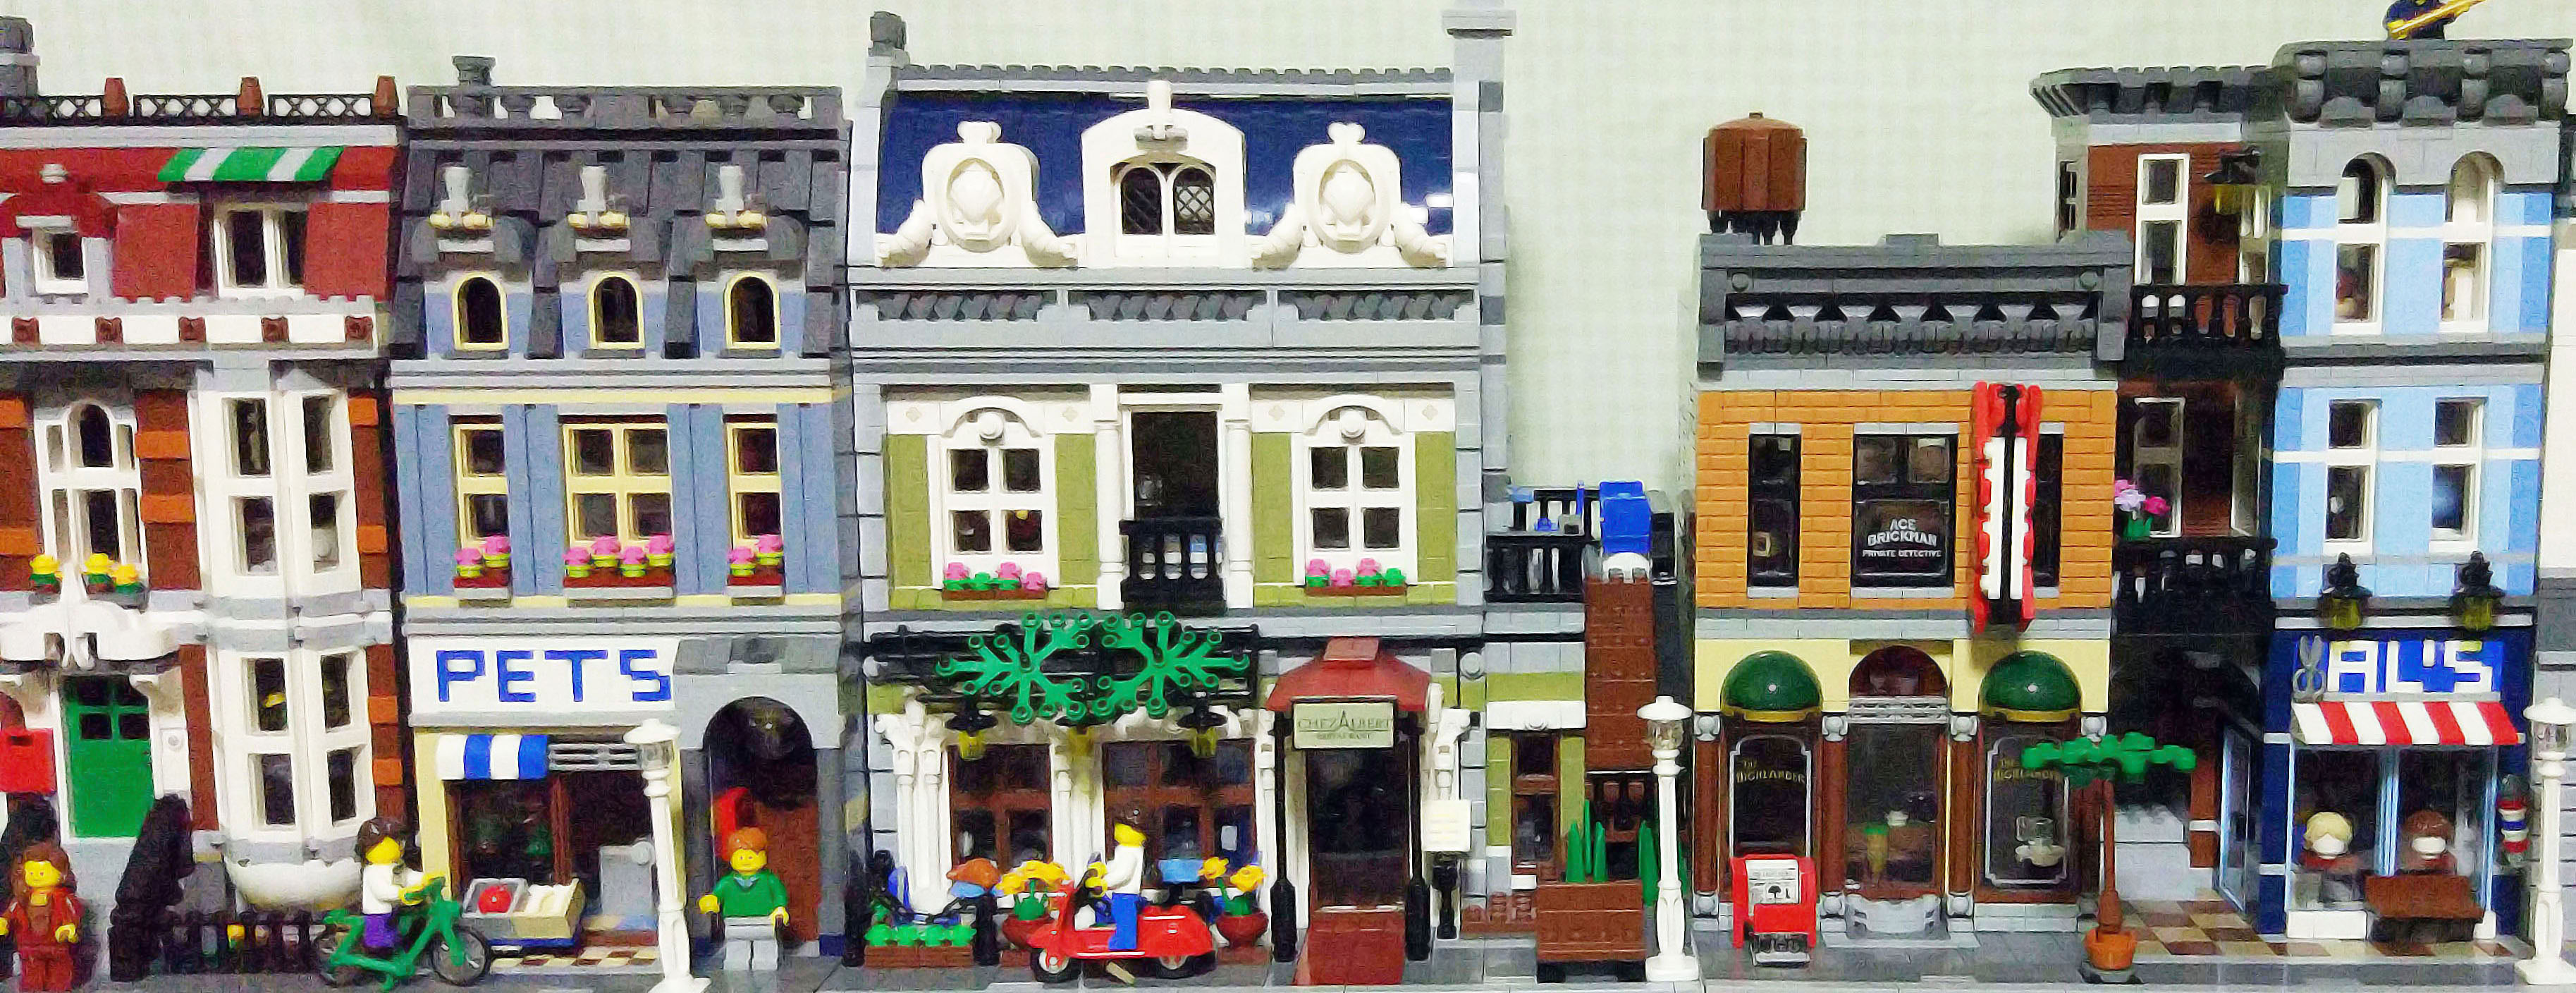 lego creator expert buildings